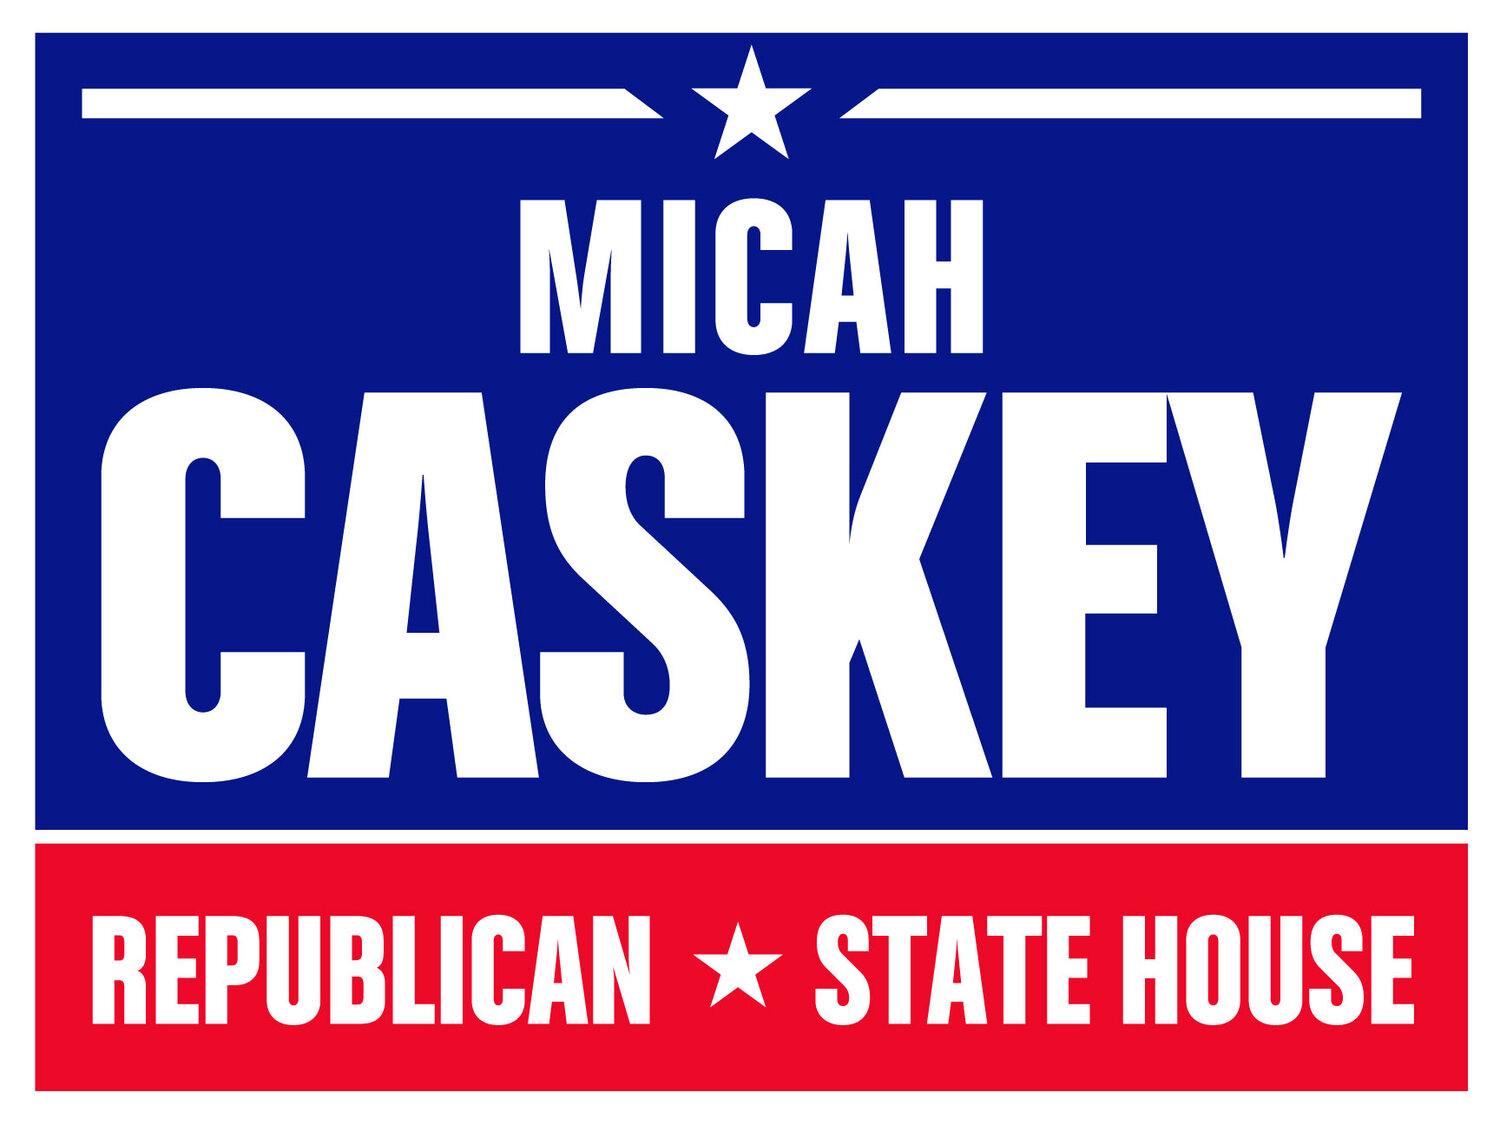 MICAH CASKEY